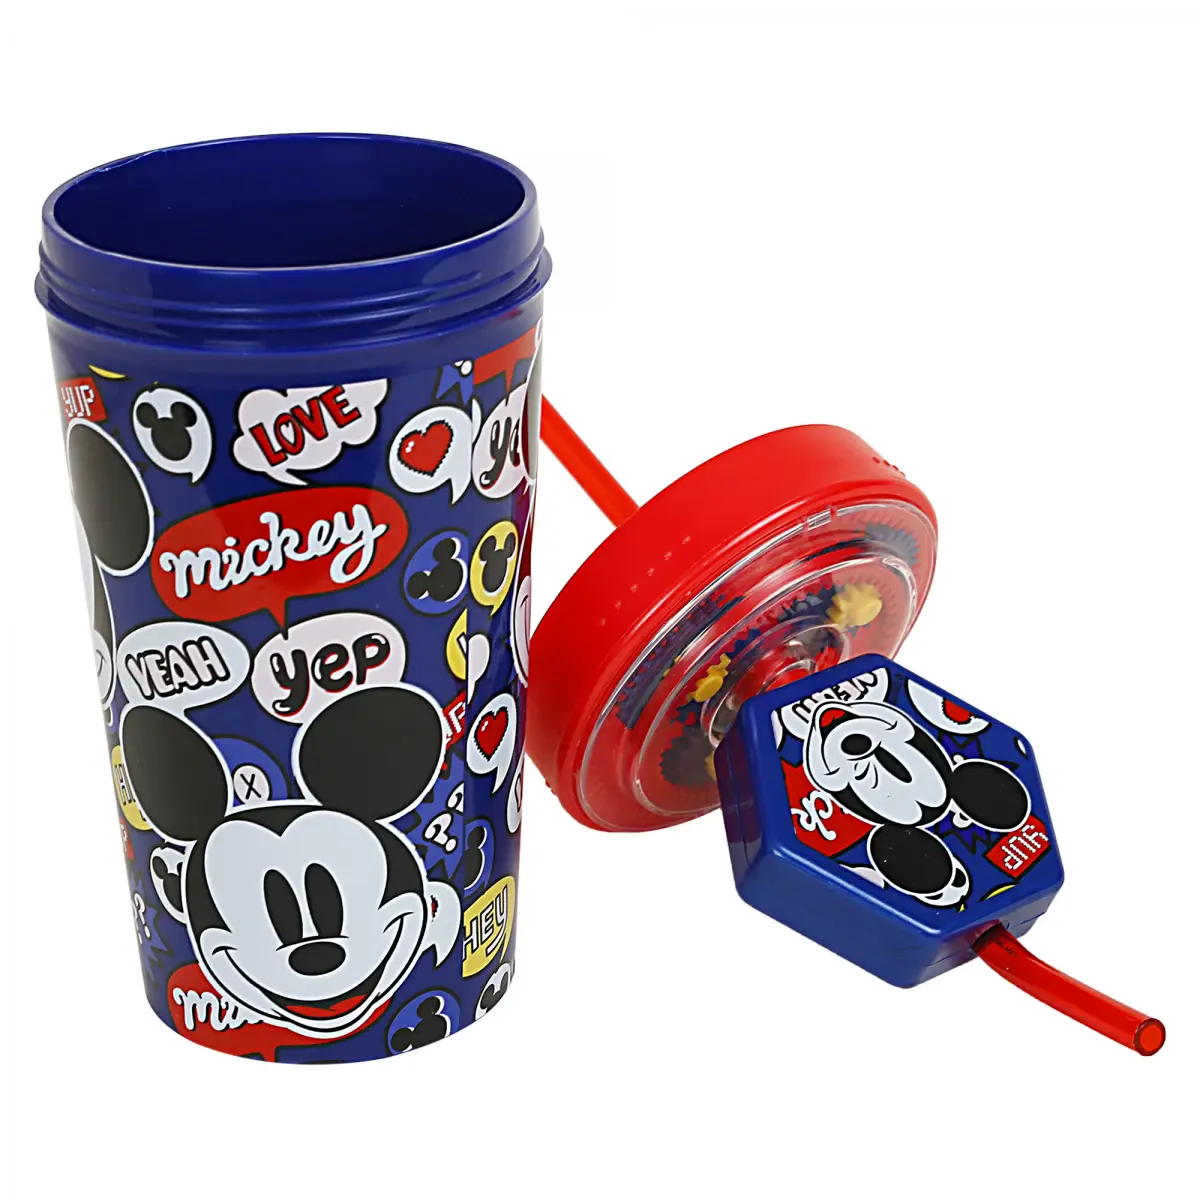 Disney Mickey Stor Character Gear Tumbler, 390ml, Multicolour